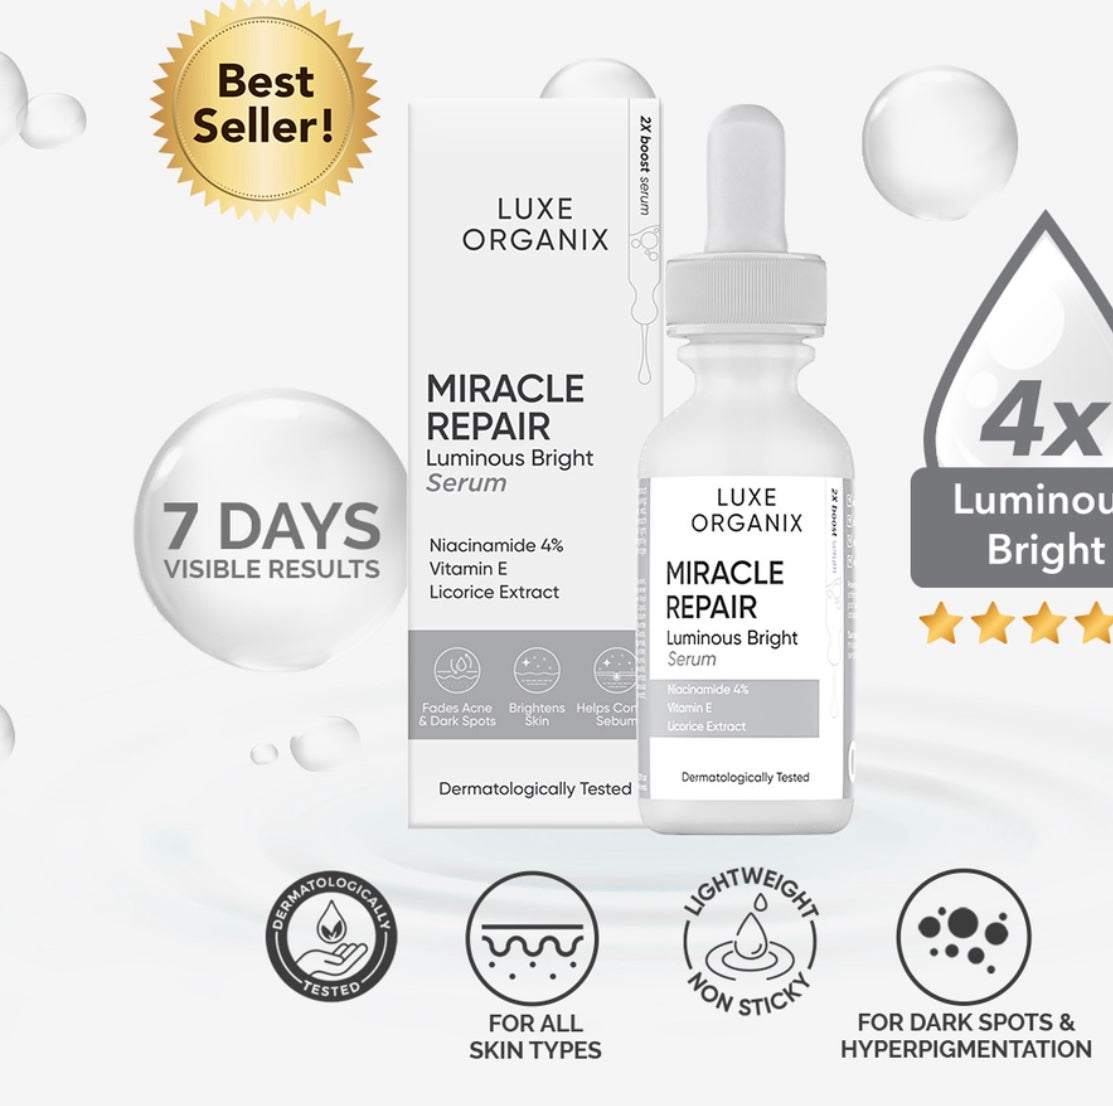 Luxe organix miracle repair luminous bright serum